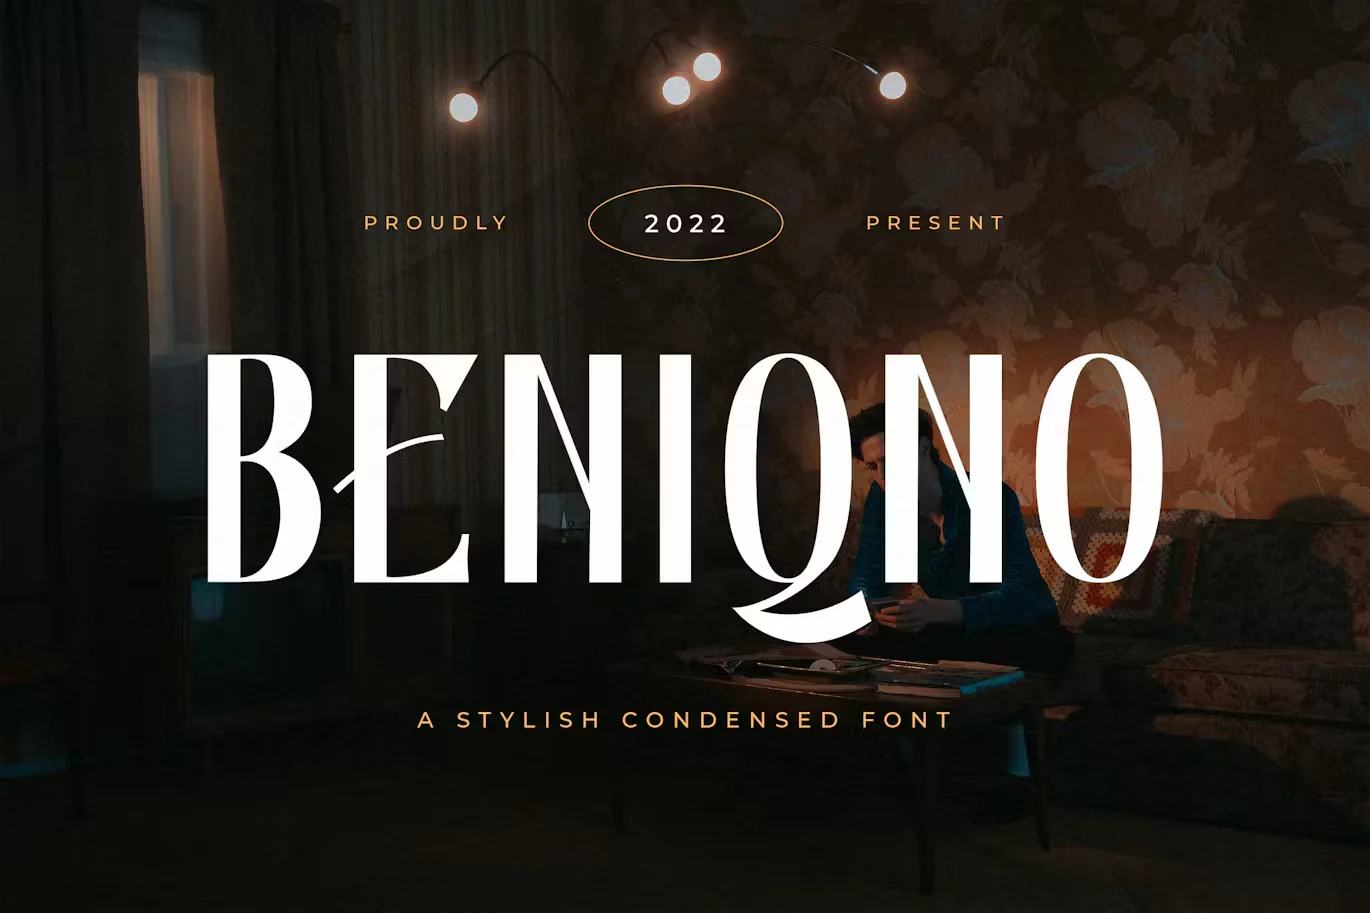 Beniqno - Stylish Condensed Font